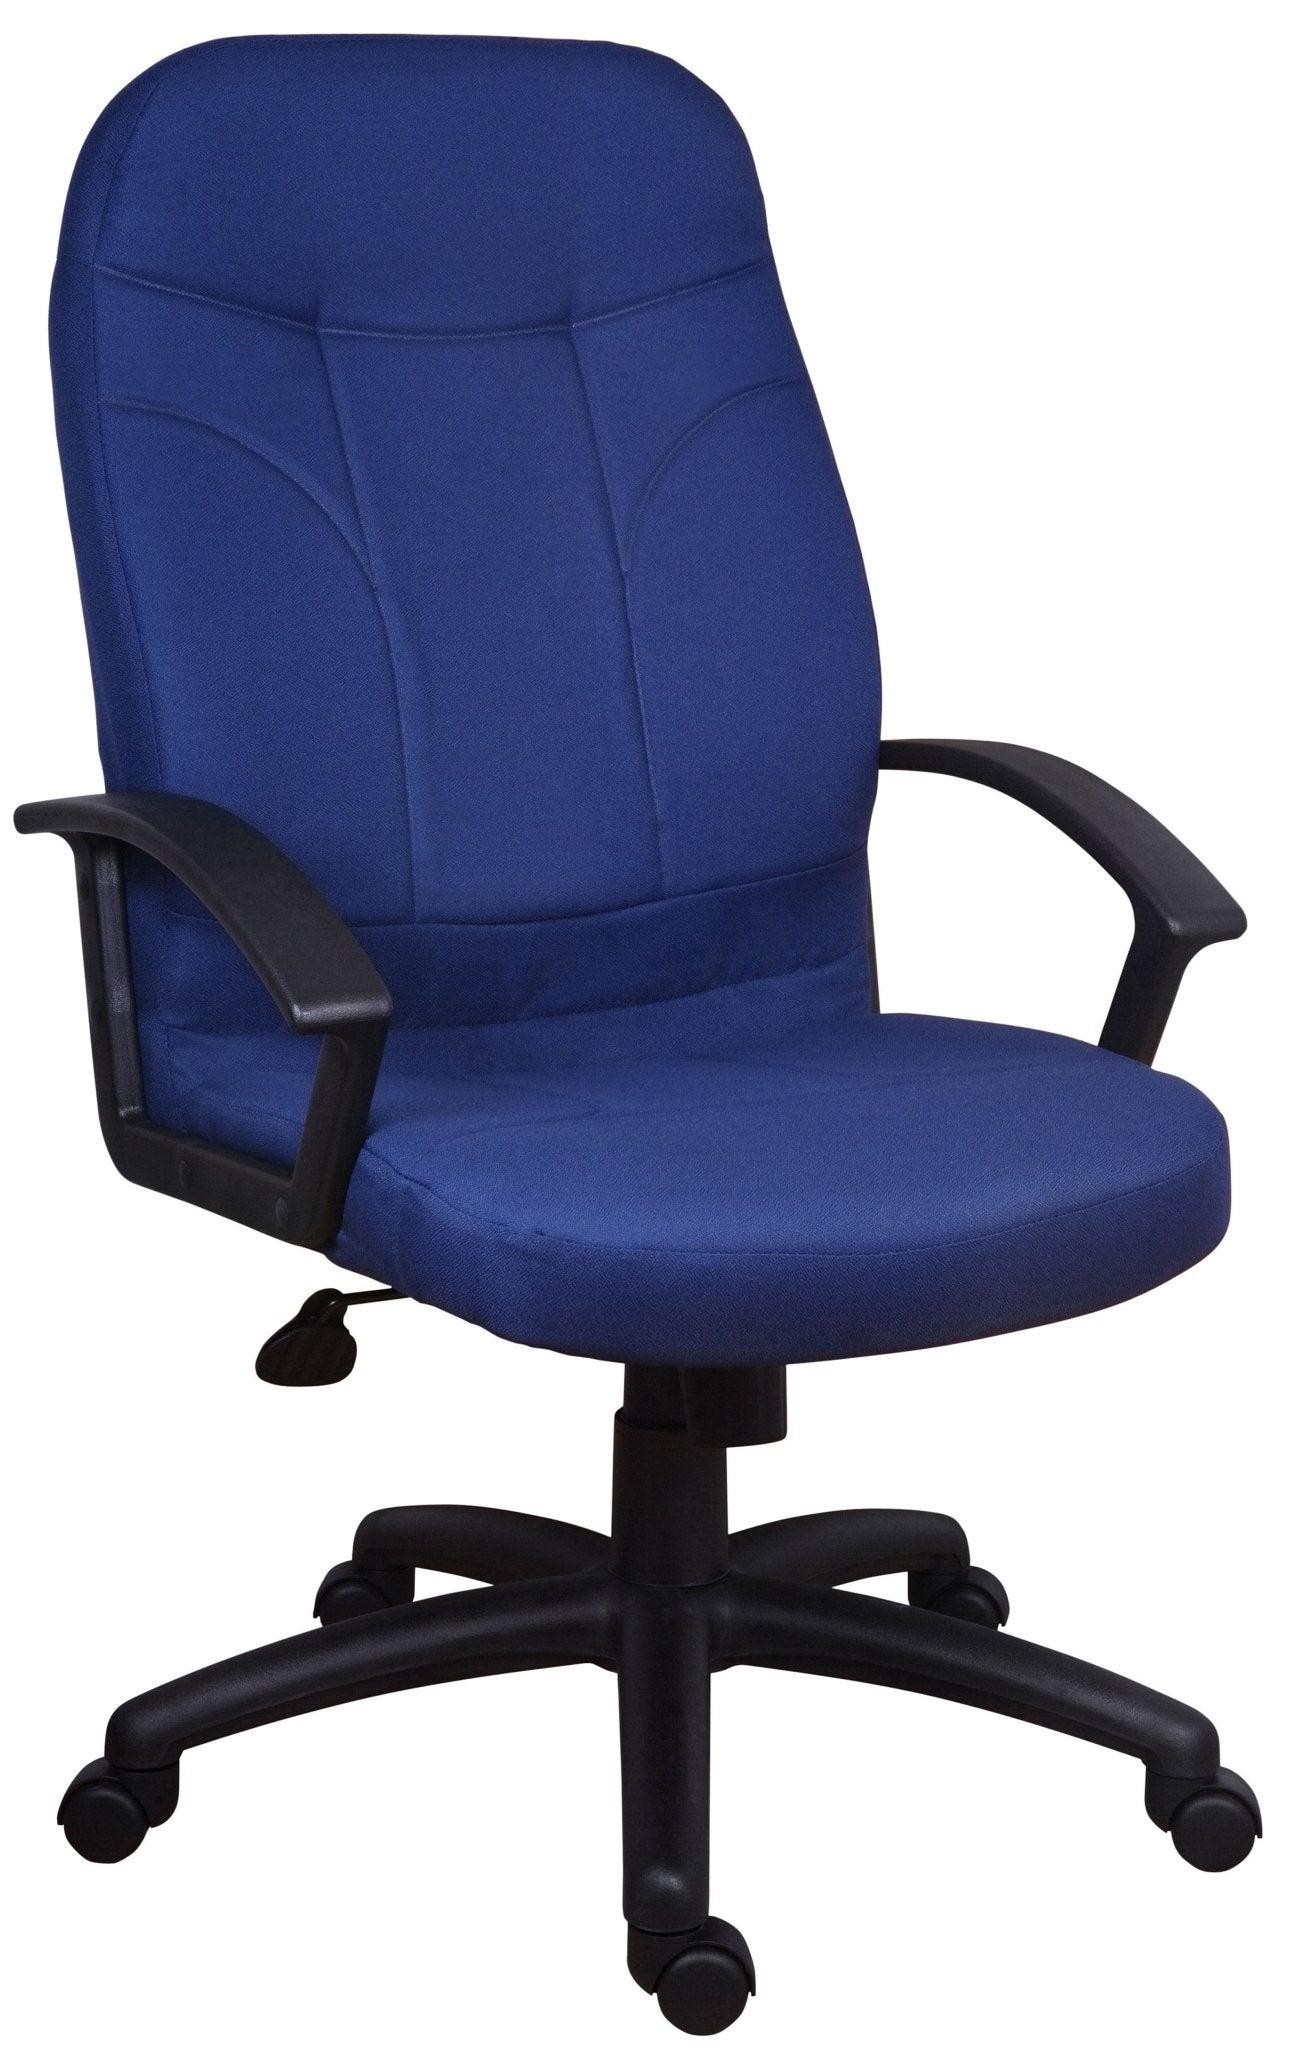 Mayfair fabric office chair (blue) - crimblefest furniture - image 1